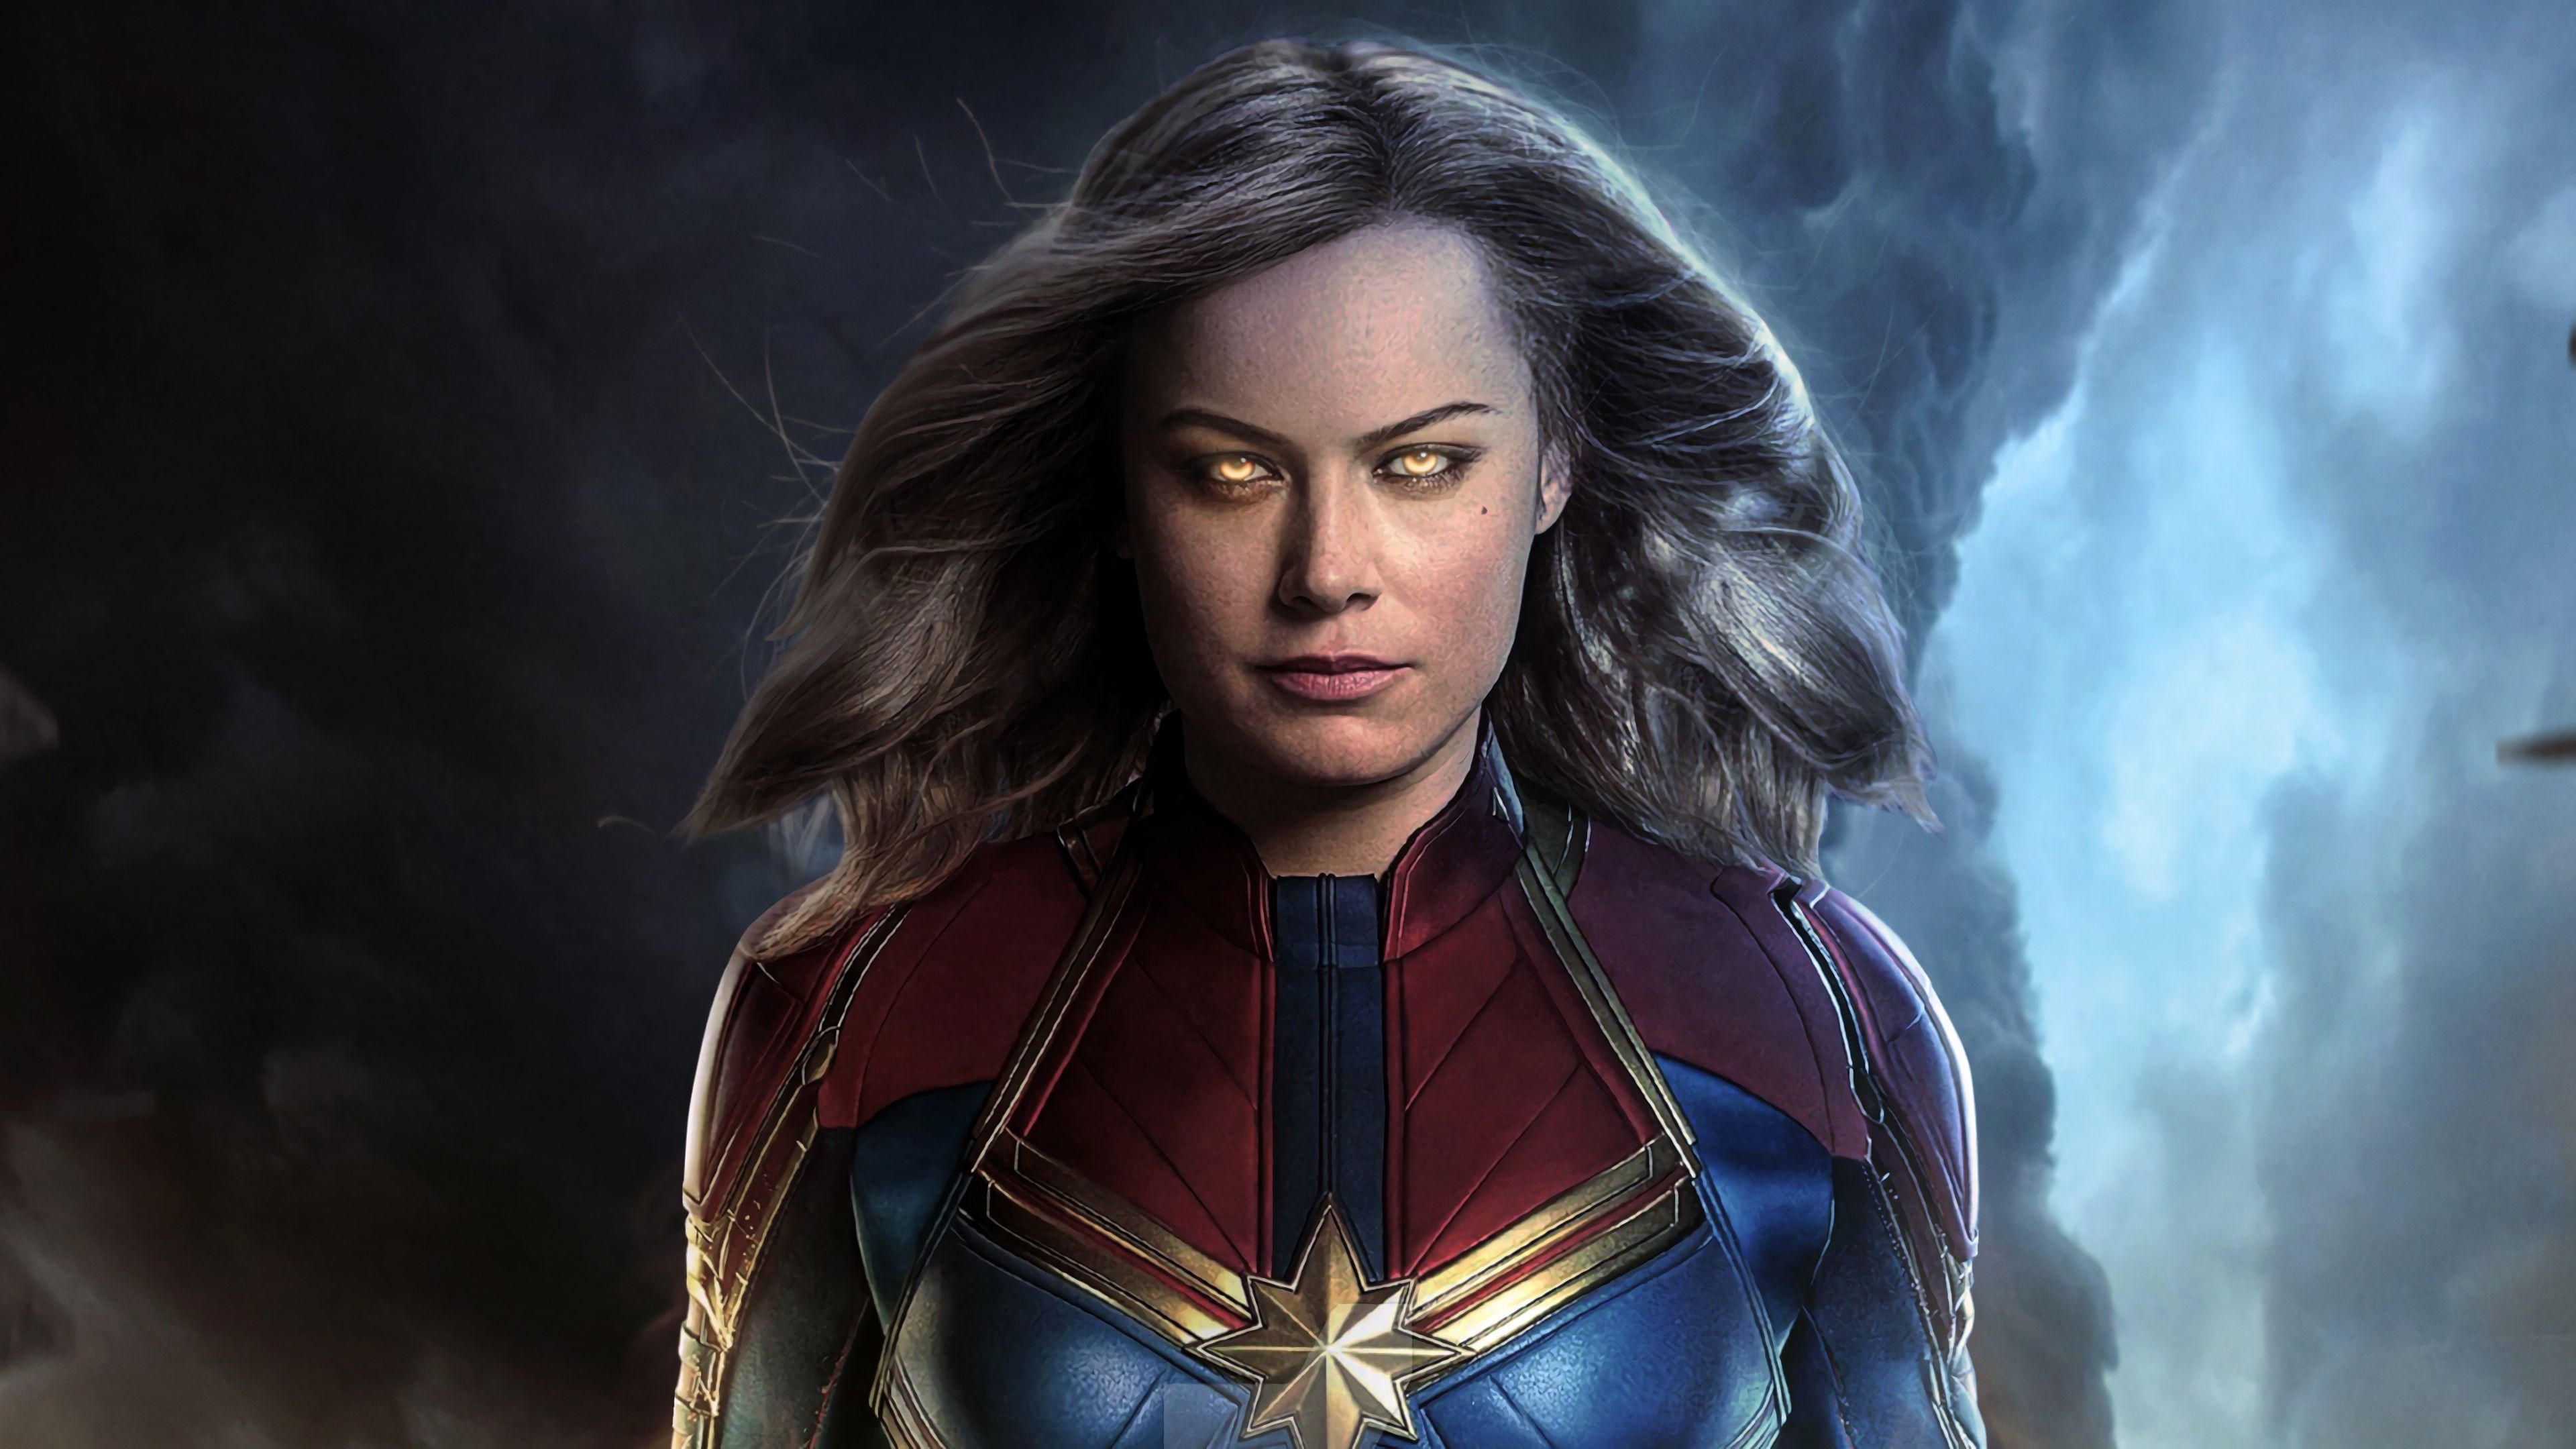 Wallpaper 4k Captain Marvel Movie 2019 Brie Larson as Carol Danvers 4K Wallpaper